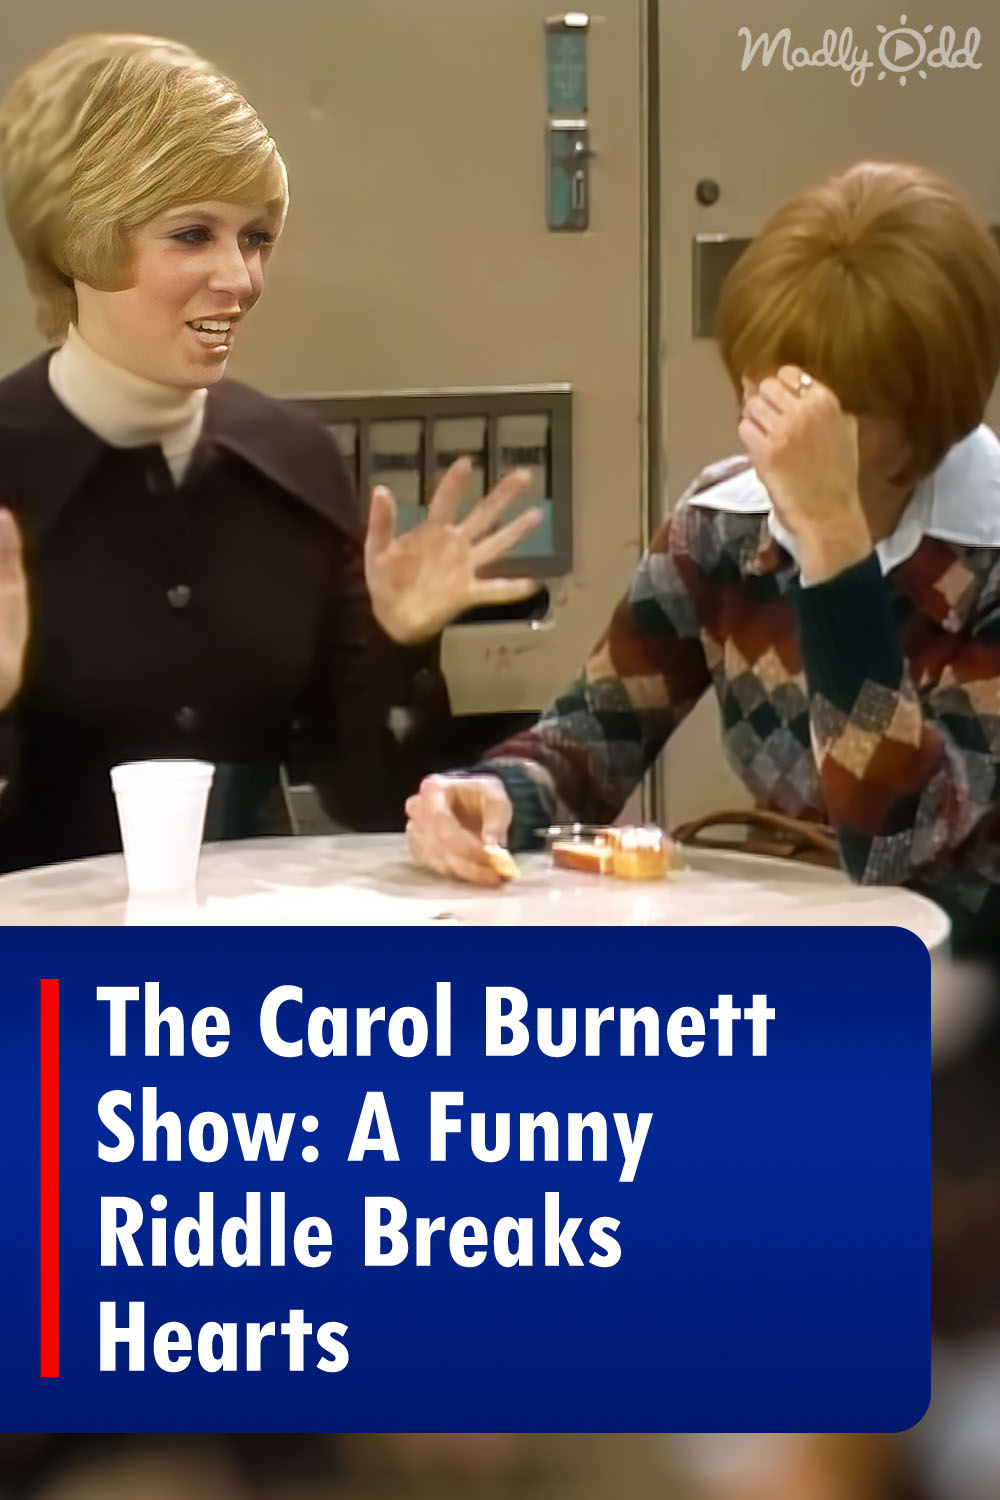 The Carol Burnett Show: A Funny Riddle Breaks Hearts